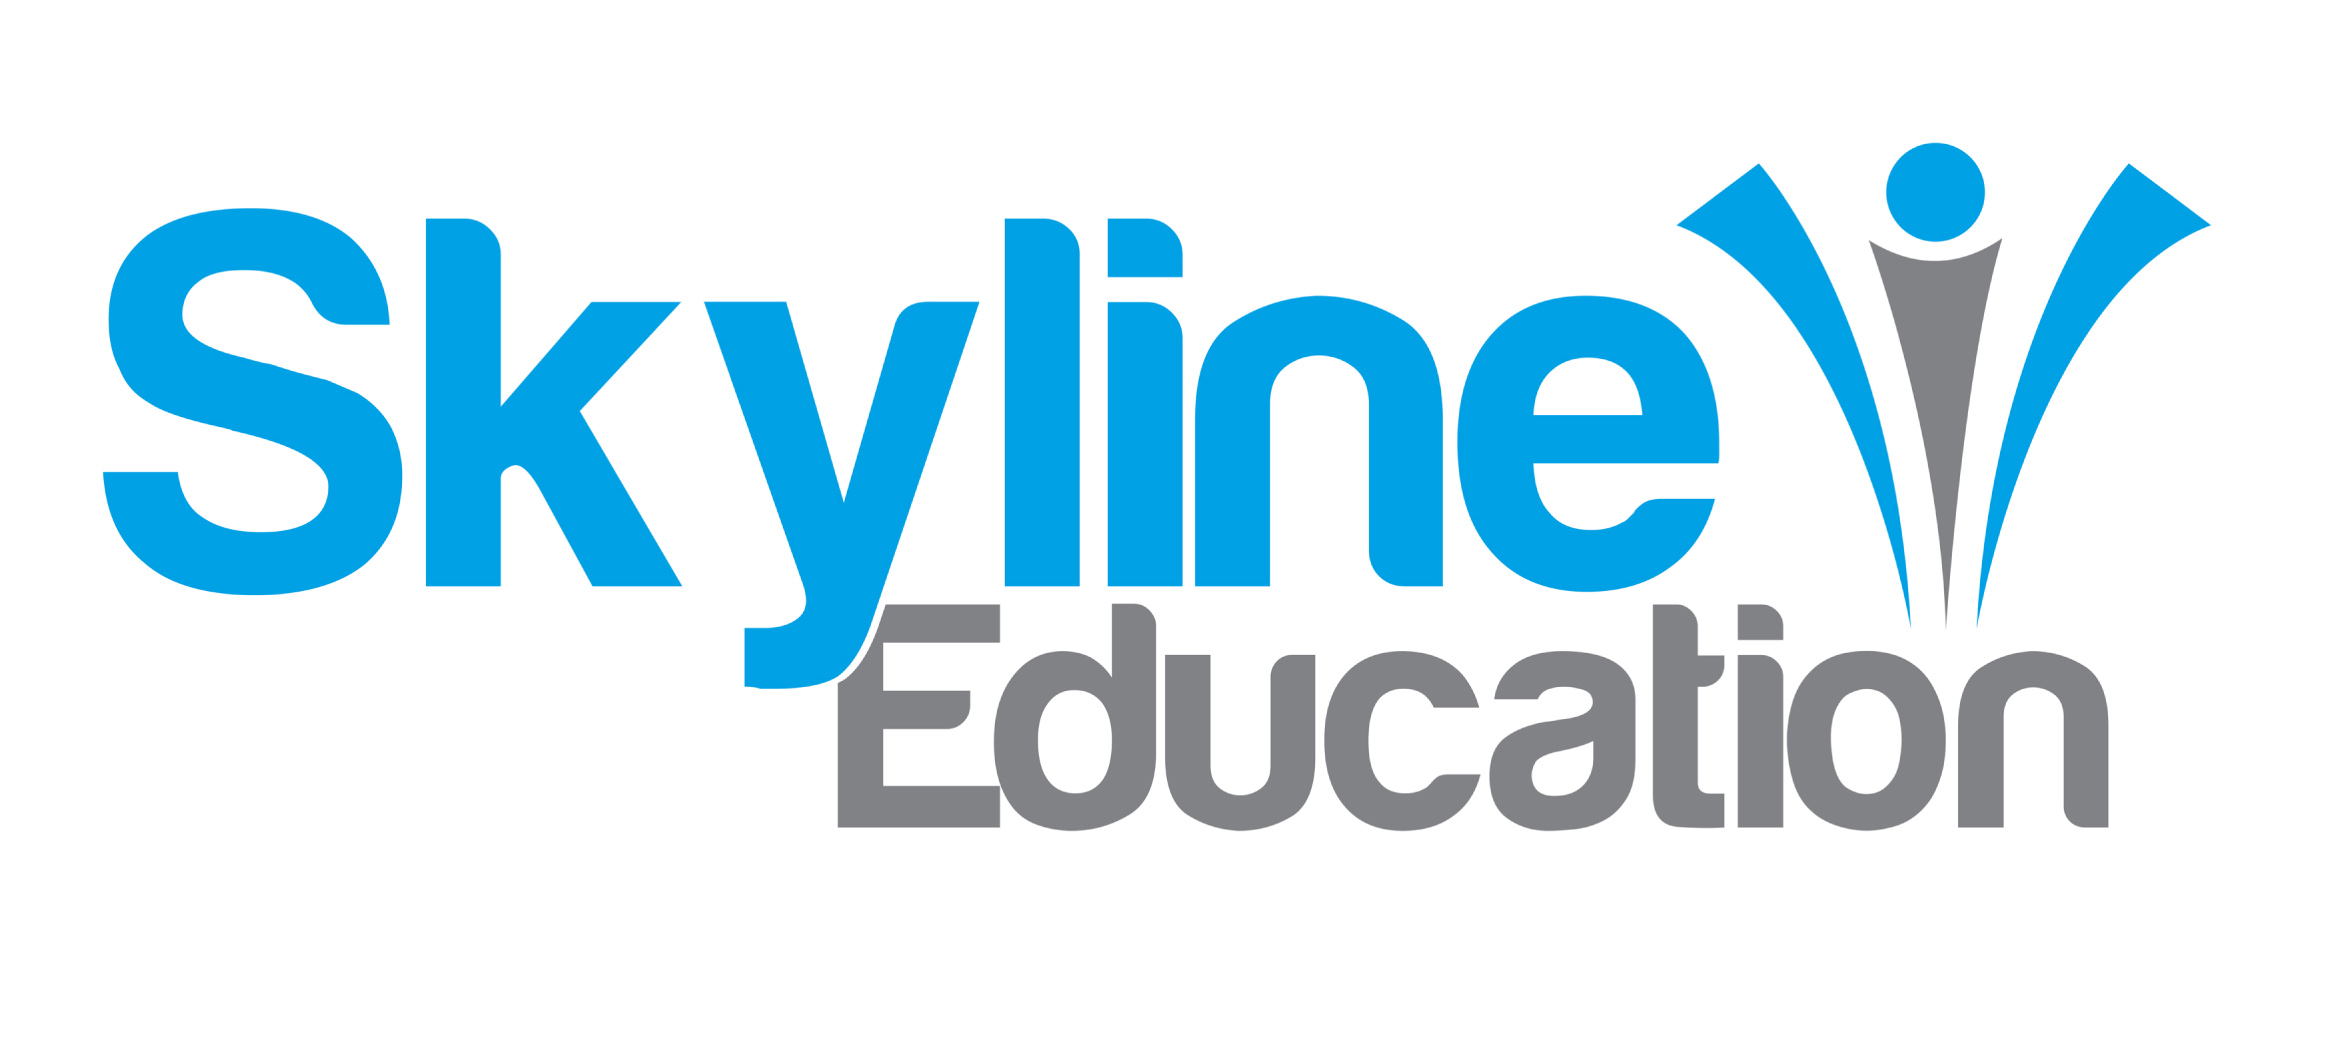 Skyline Education Consultancy